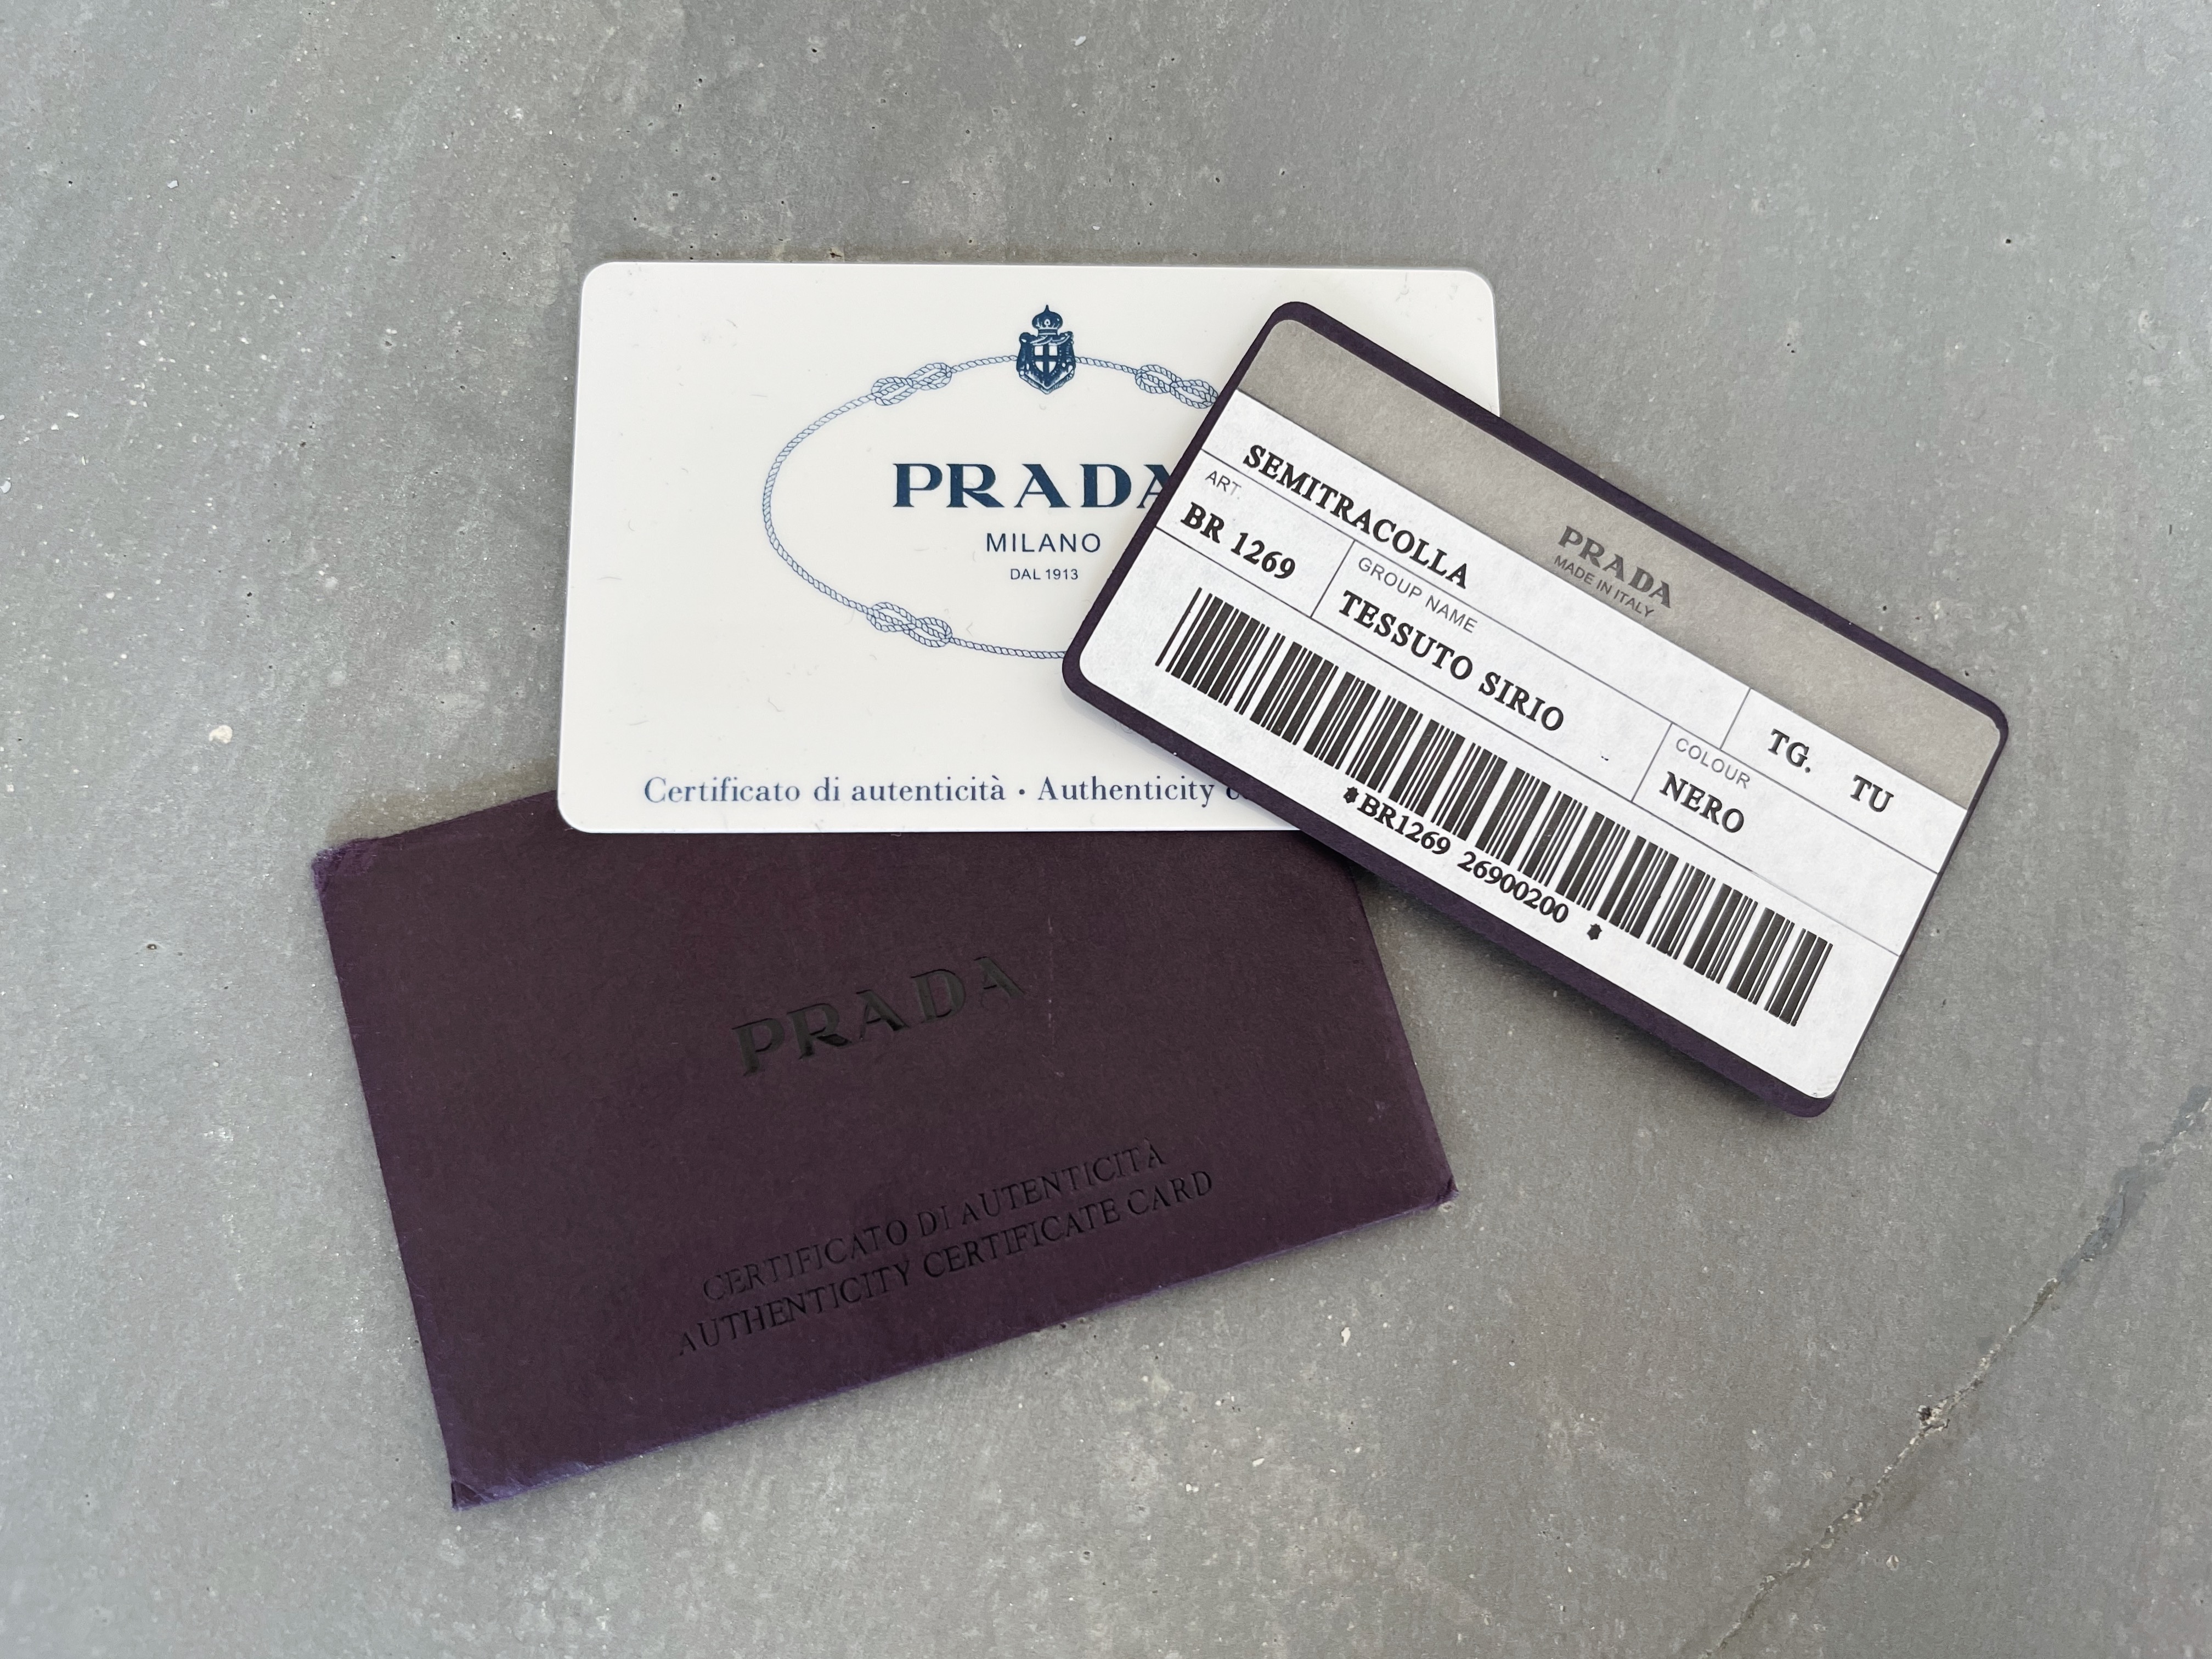 How to spot af fake Prada bag | The Archive